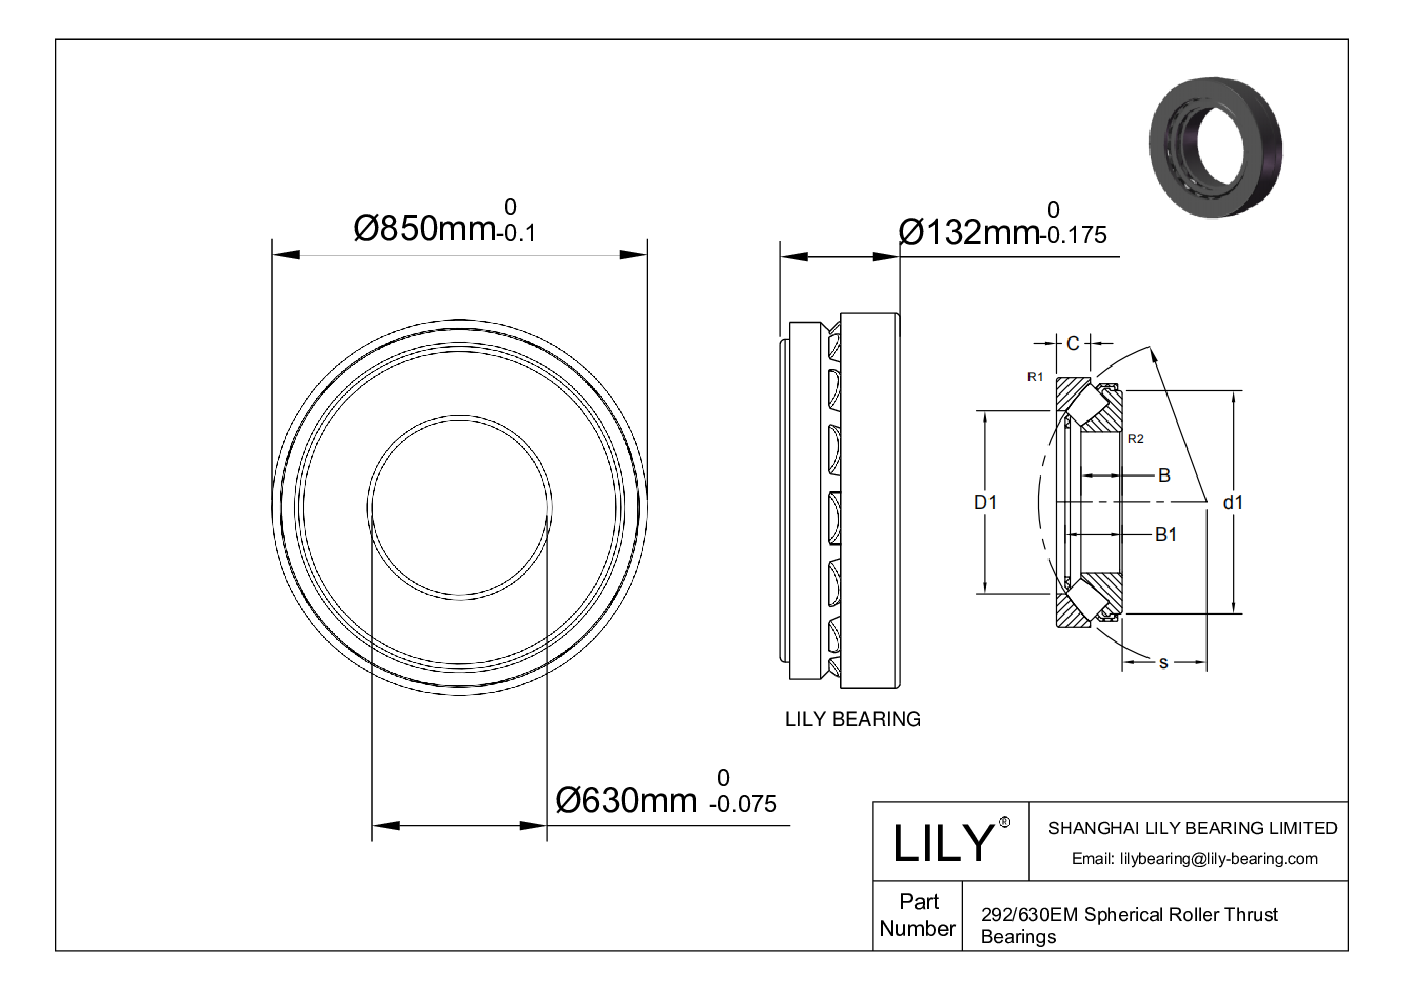 292/630 EM Spherical Roller Thrust Bearings cad drawing